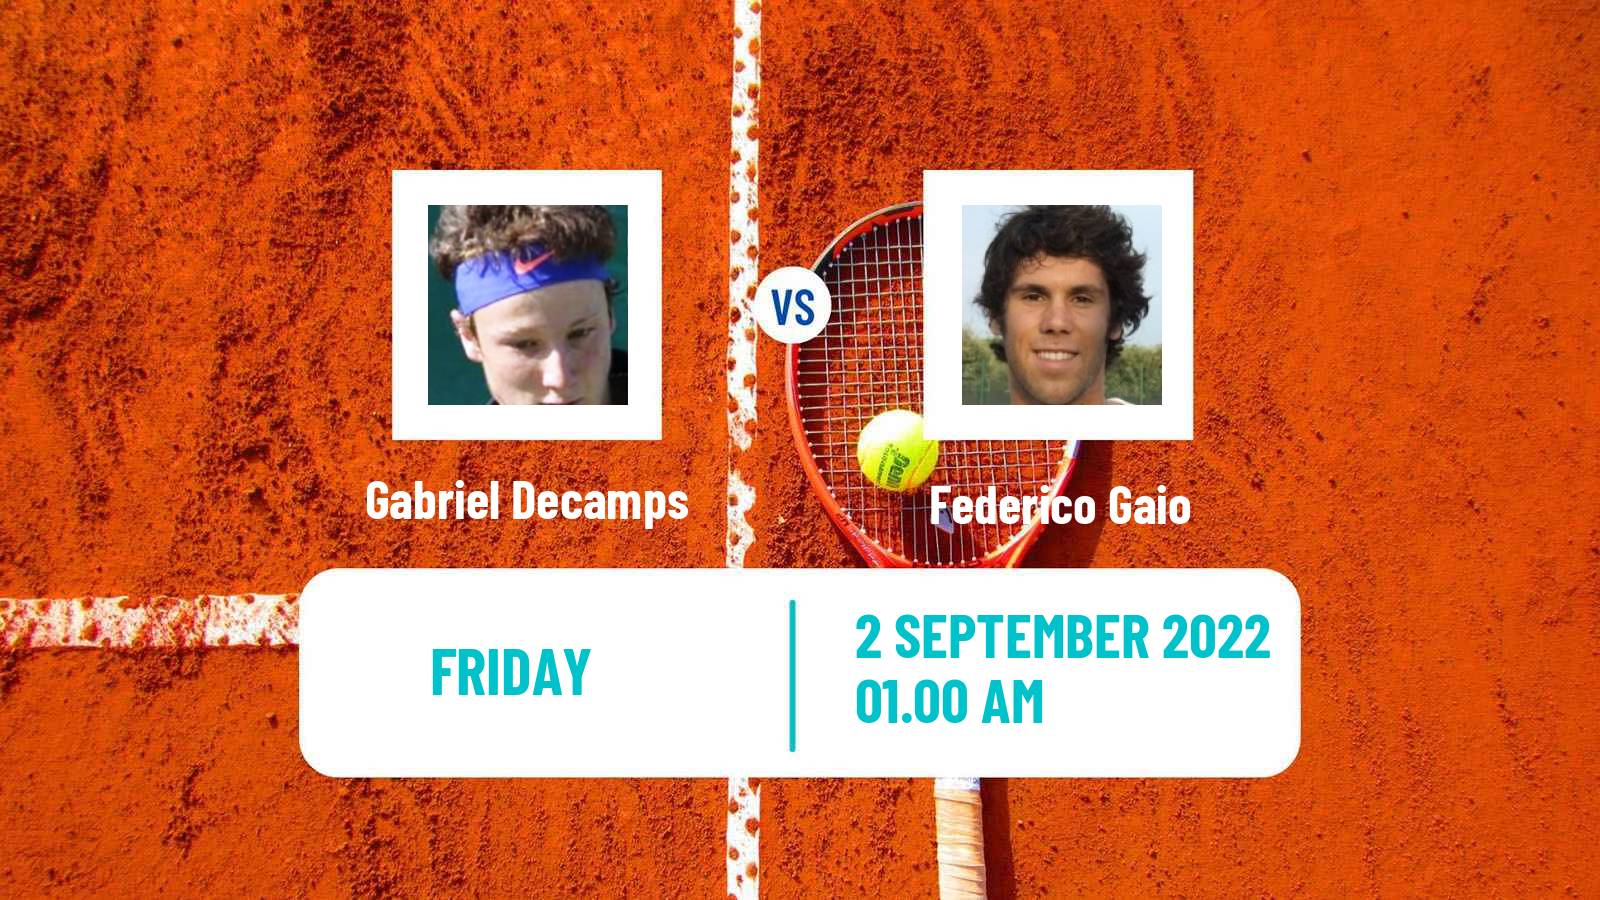 Tennis ATP Challenger Gabriel Decamps - Federico Gaio